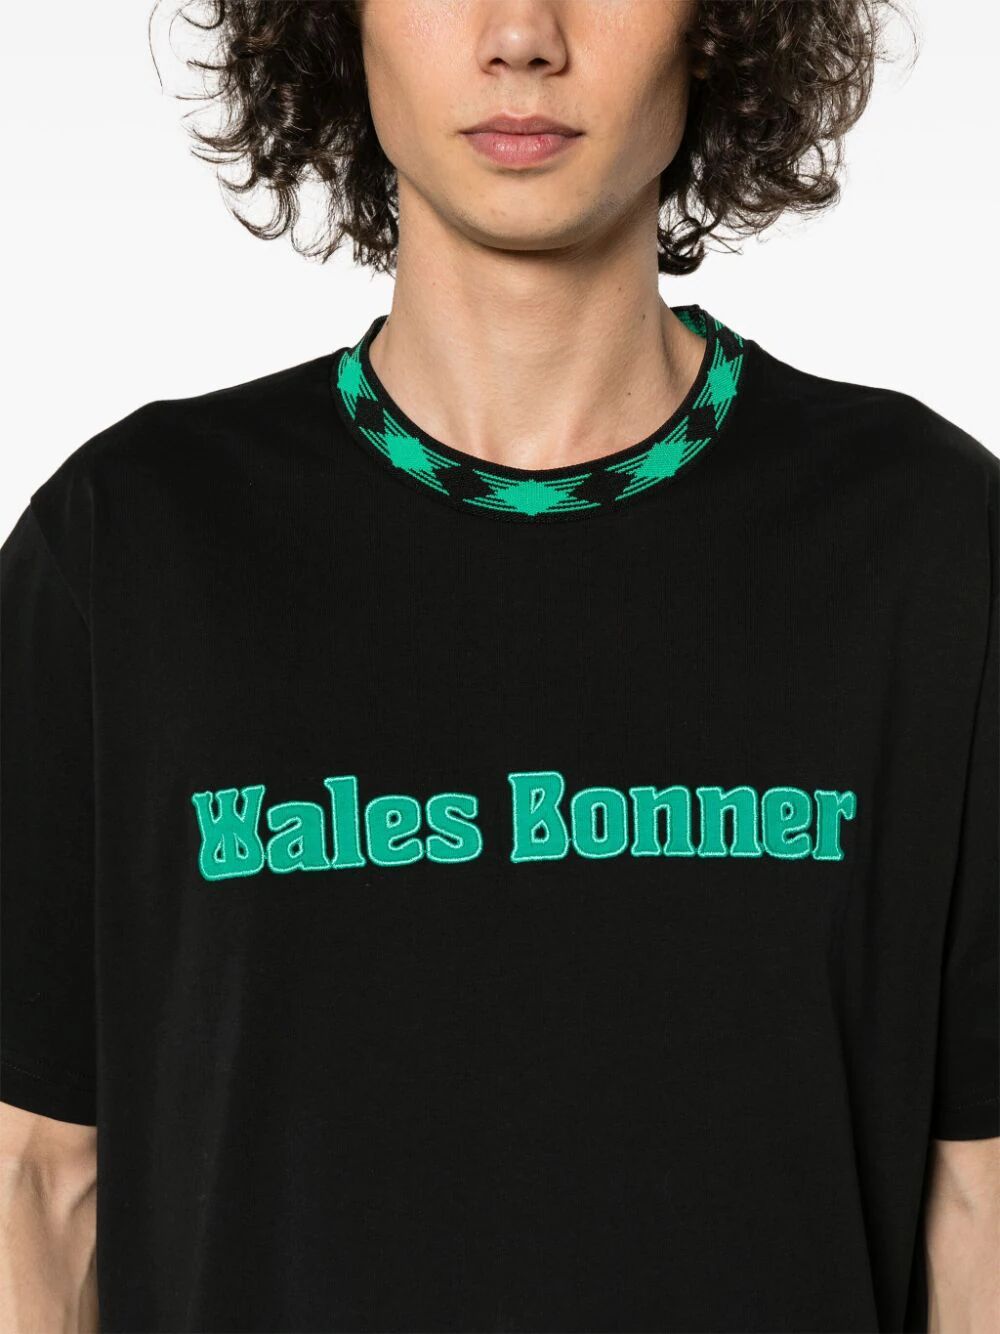 WALES BONNER-LOGO BLACK T-SHIRT-MS24JE16 JE01 900 BLACK